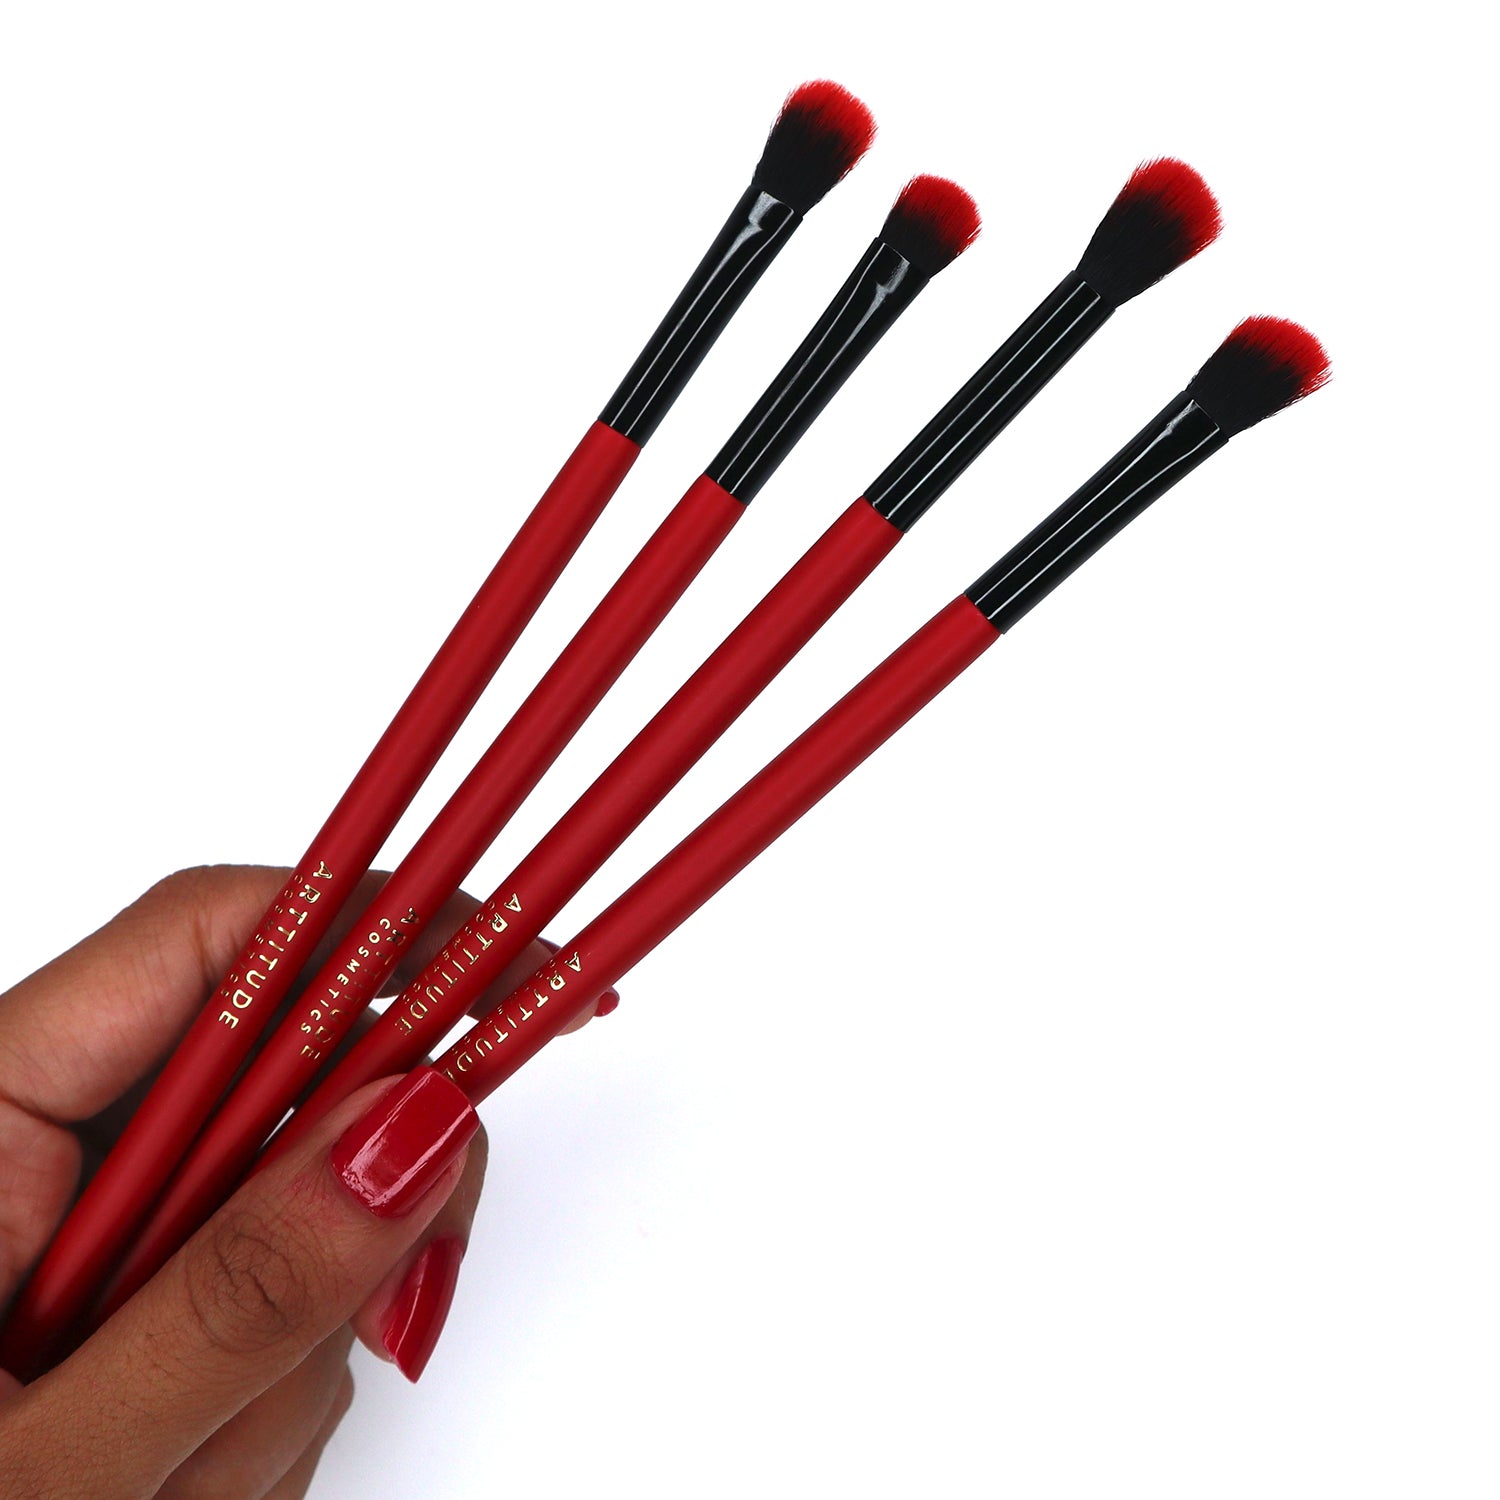 Red and Black Make-Up Brush Set - 4 Piece Blending Brushes